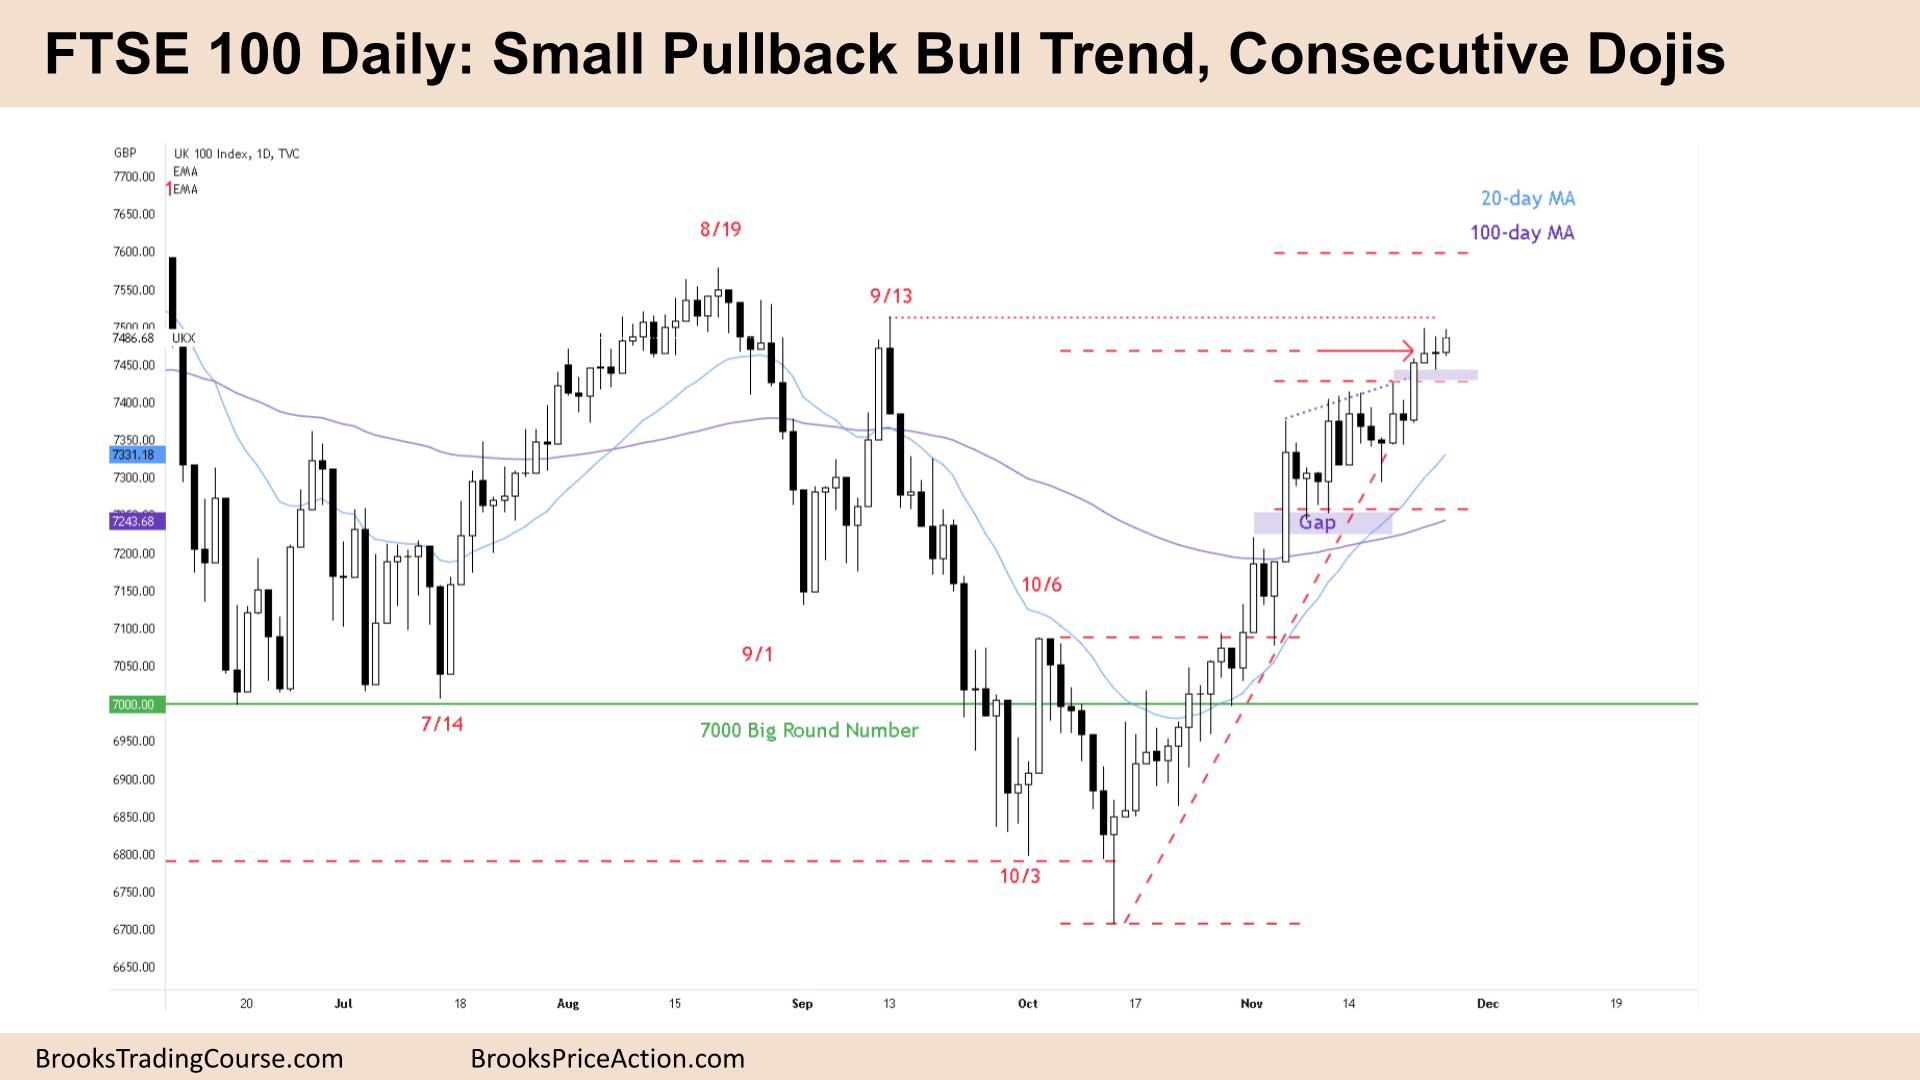 FTSE 100 Small Pullback Bull Trend, Consecutive Dojis